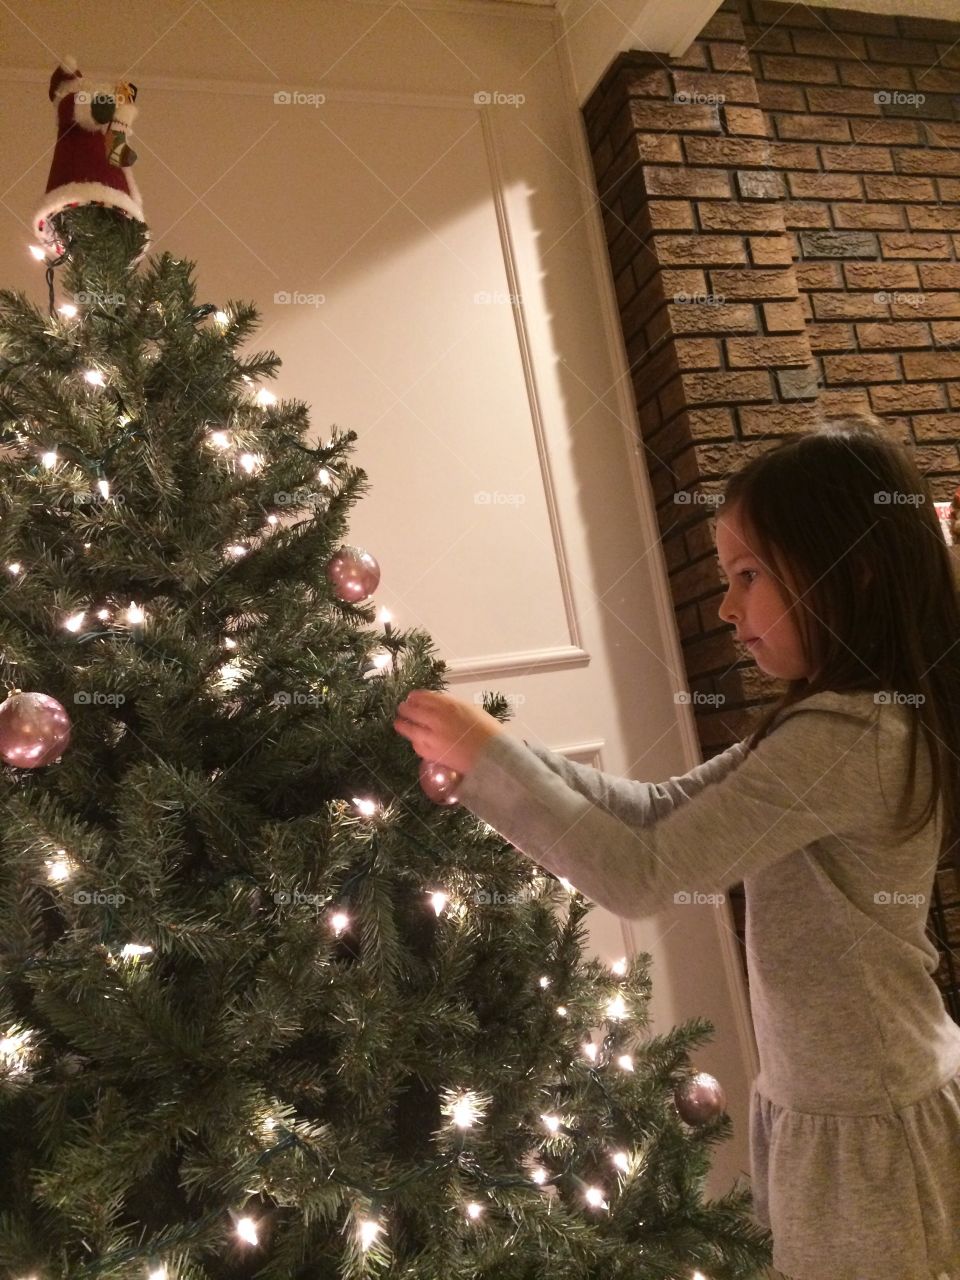 Decorating the Christmas tree.